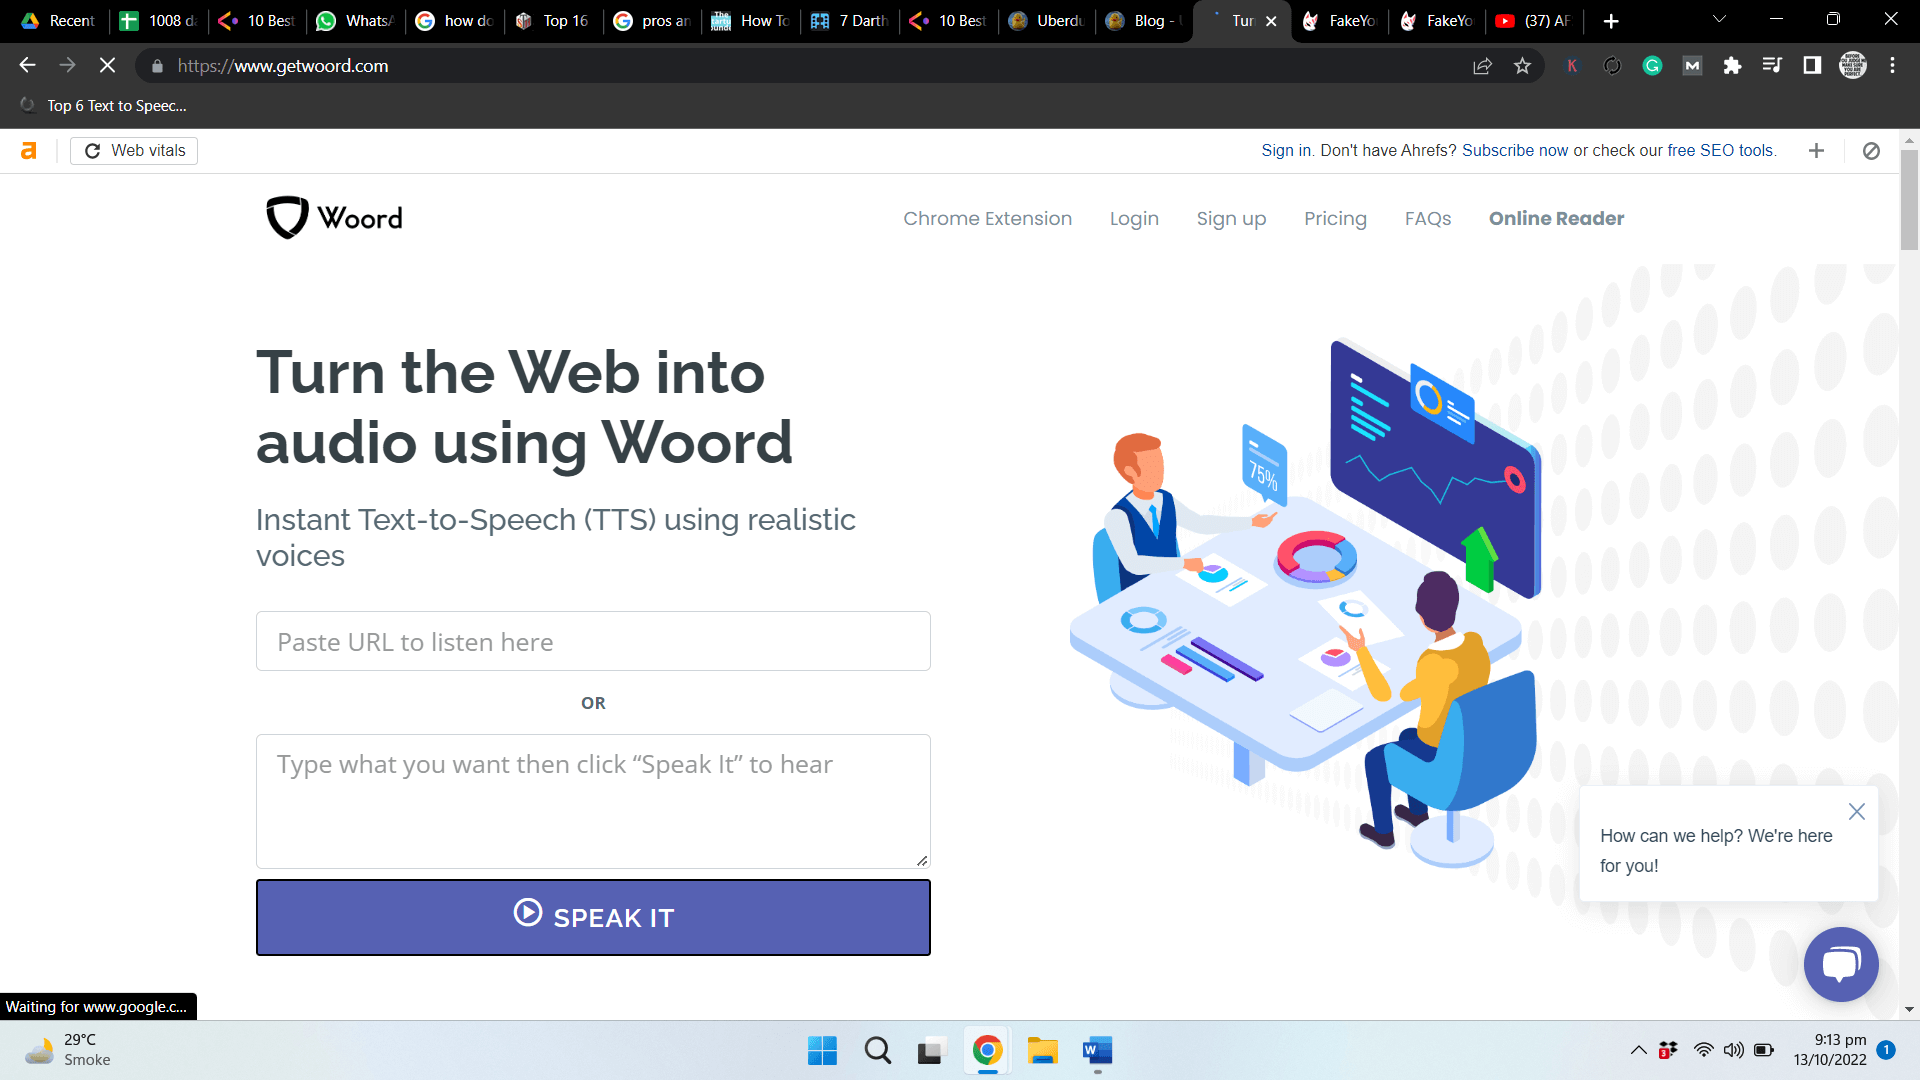 woord official website